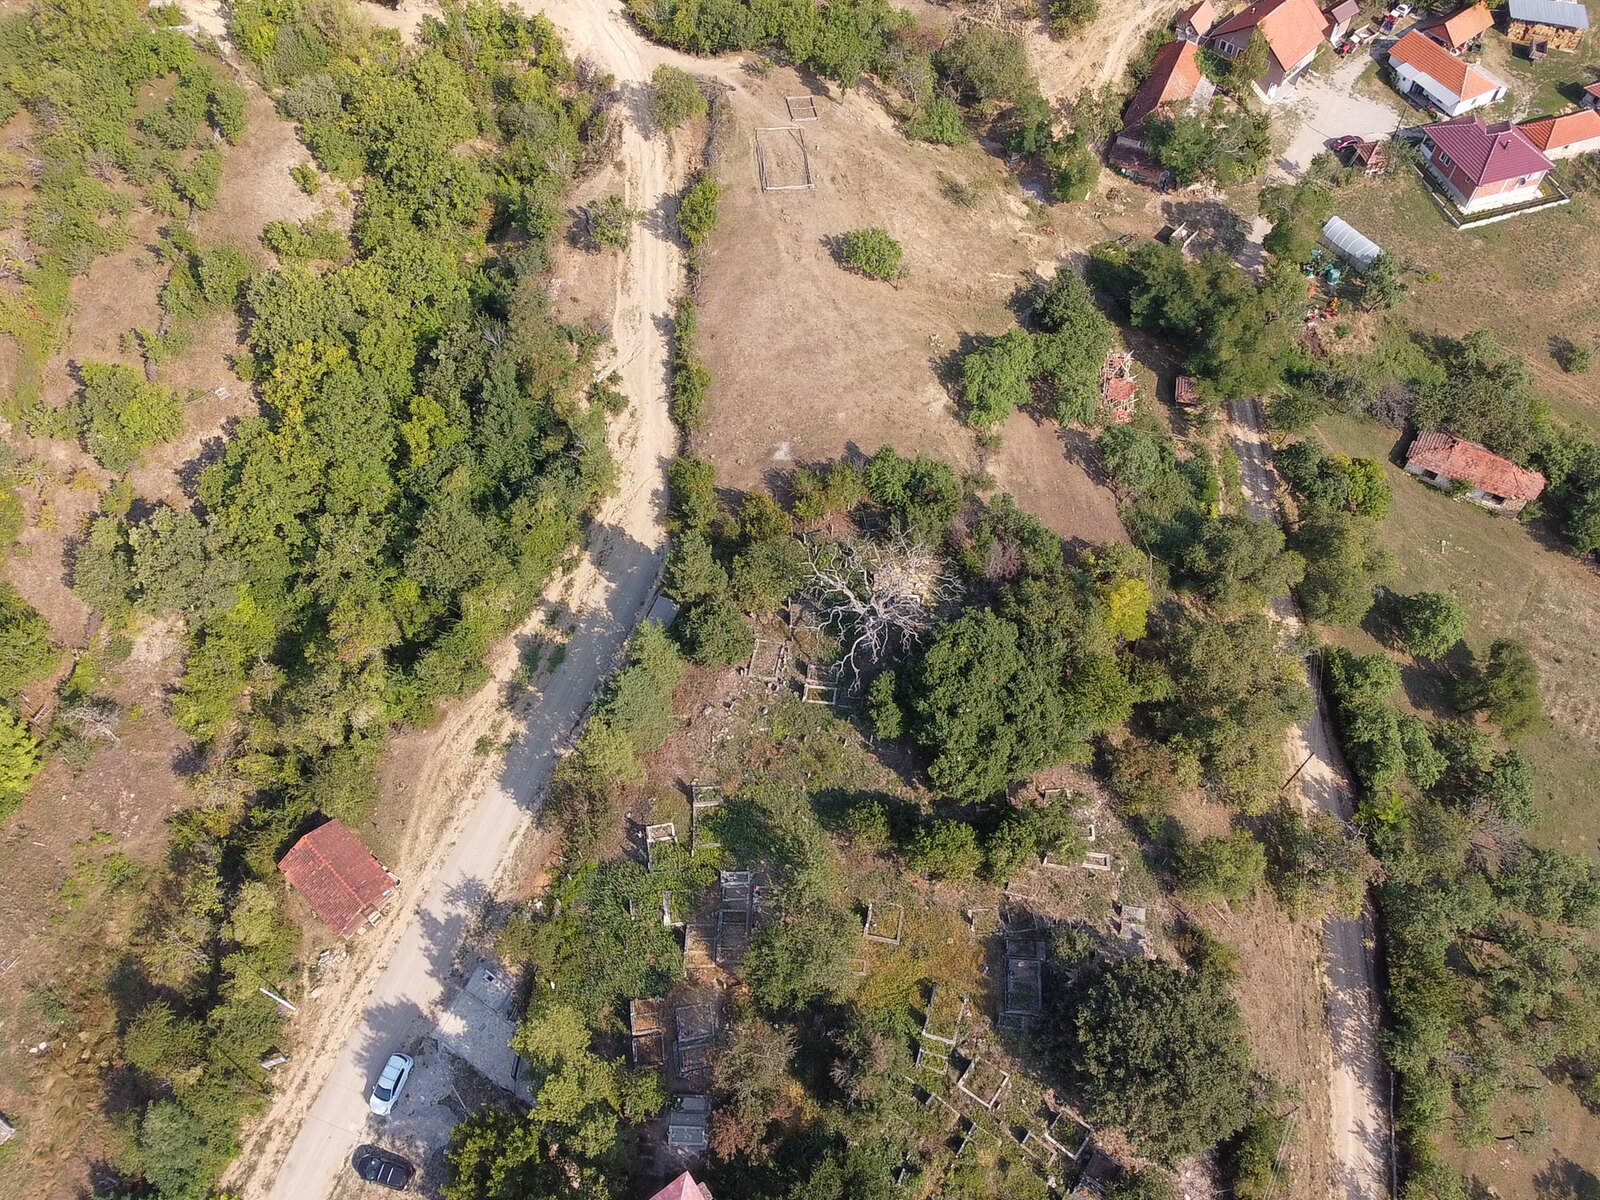 Crkolez, surrounding, drone view